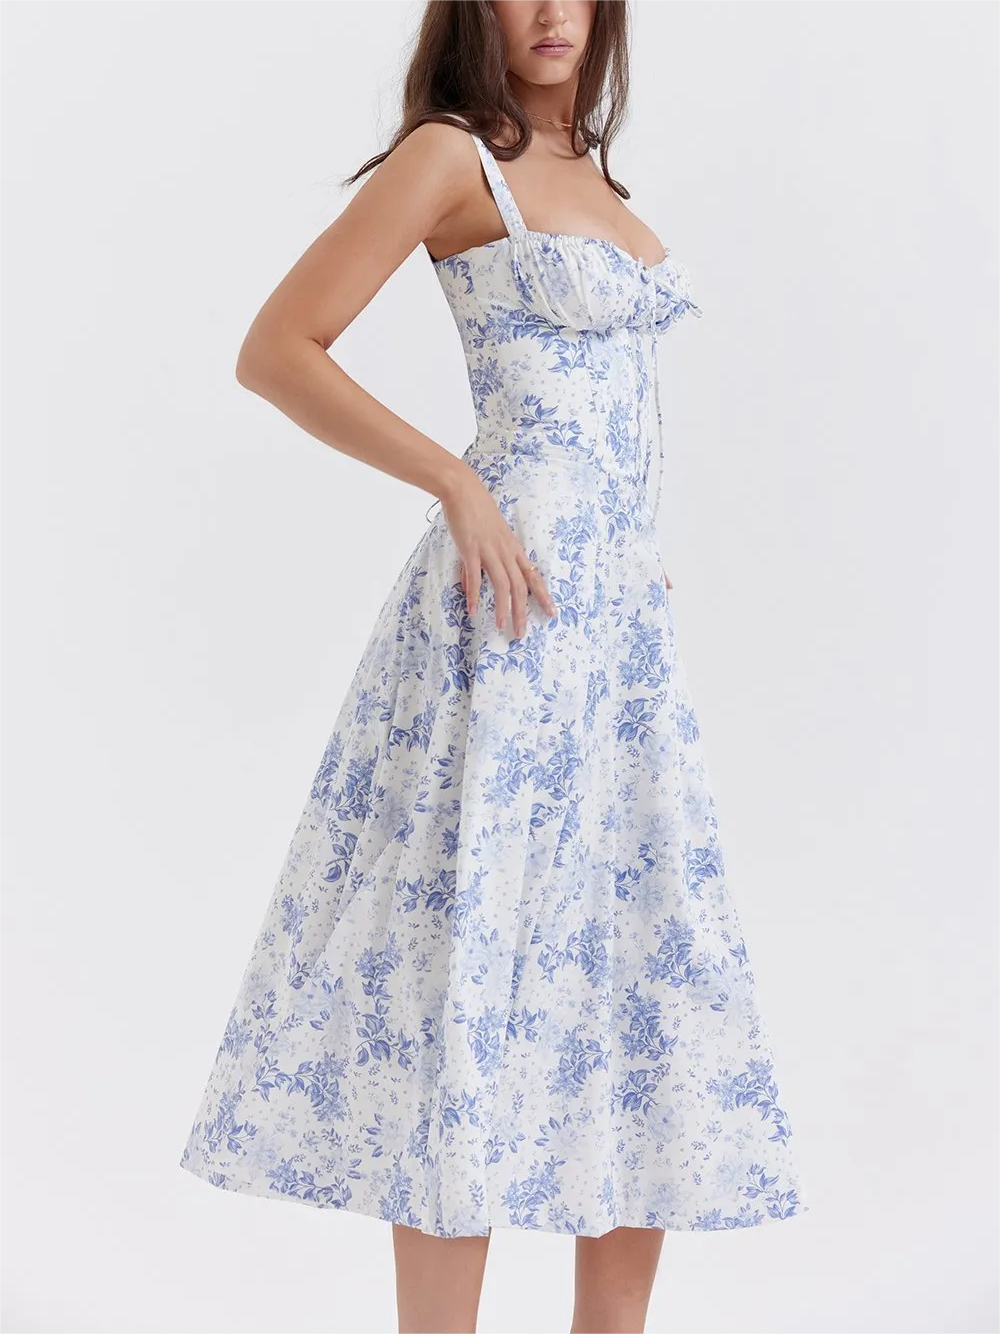 Floral Bustier Midriff Waist Shaper Dress (Buy 2 Free Shipping